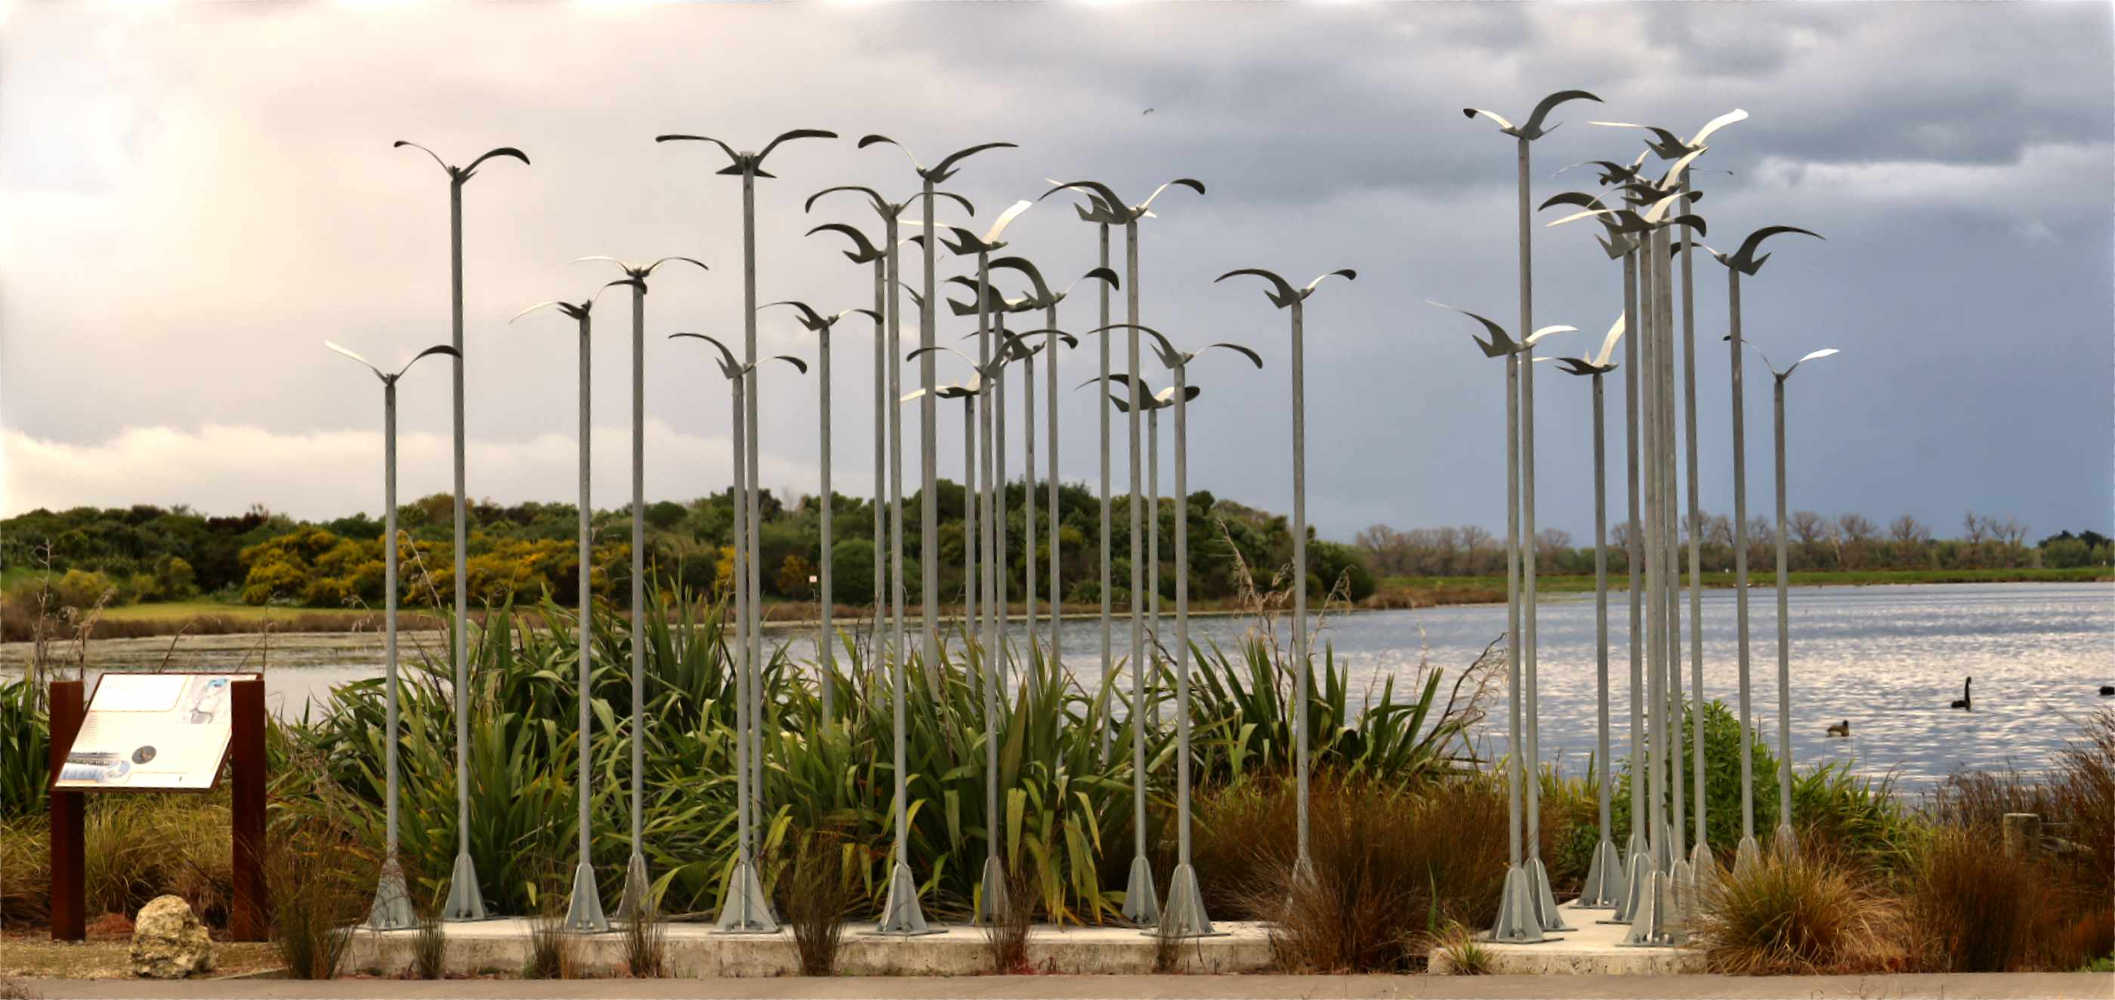 Ahuriri boardwalk flying bird sculptures, Napier, Hawke's Bay, New Zealand